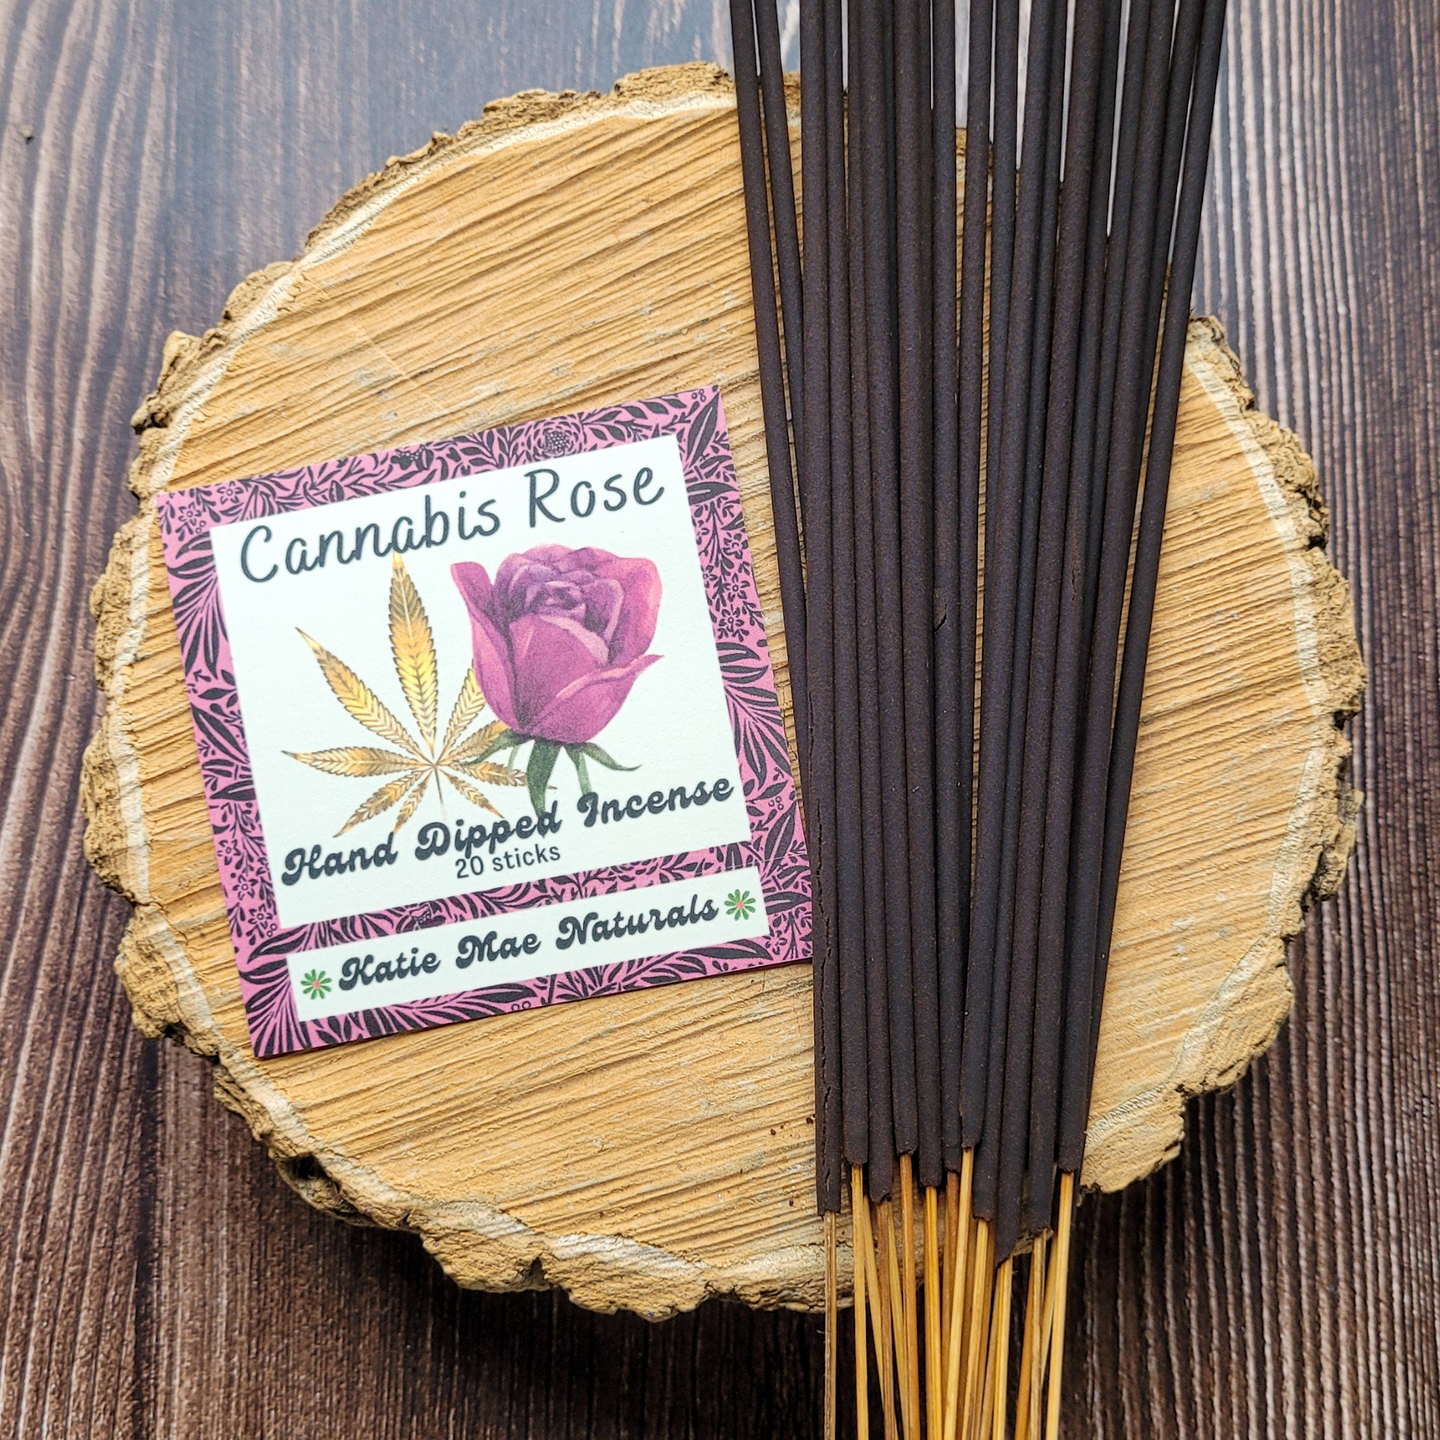 Cannabis rose hand dipped incense sticks 